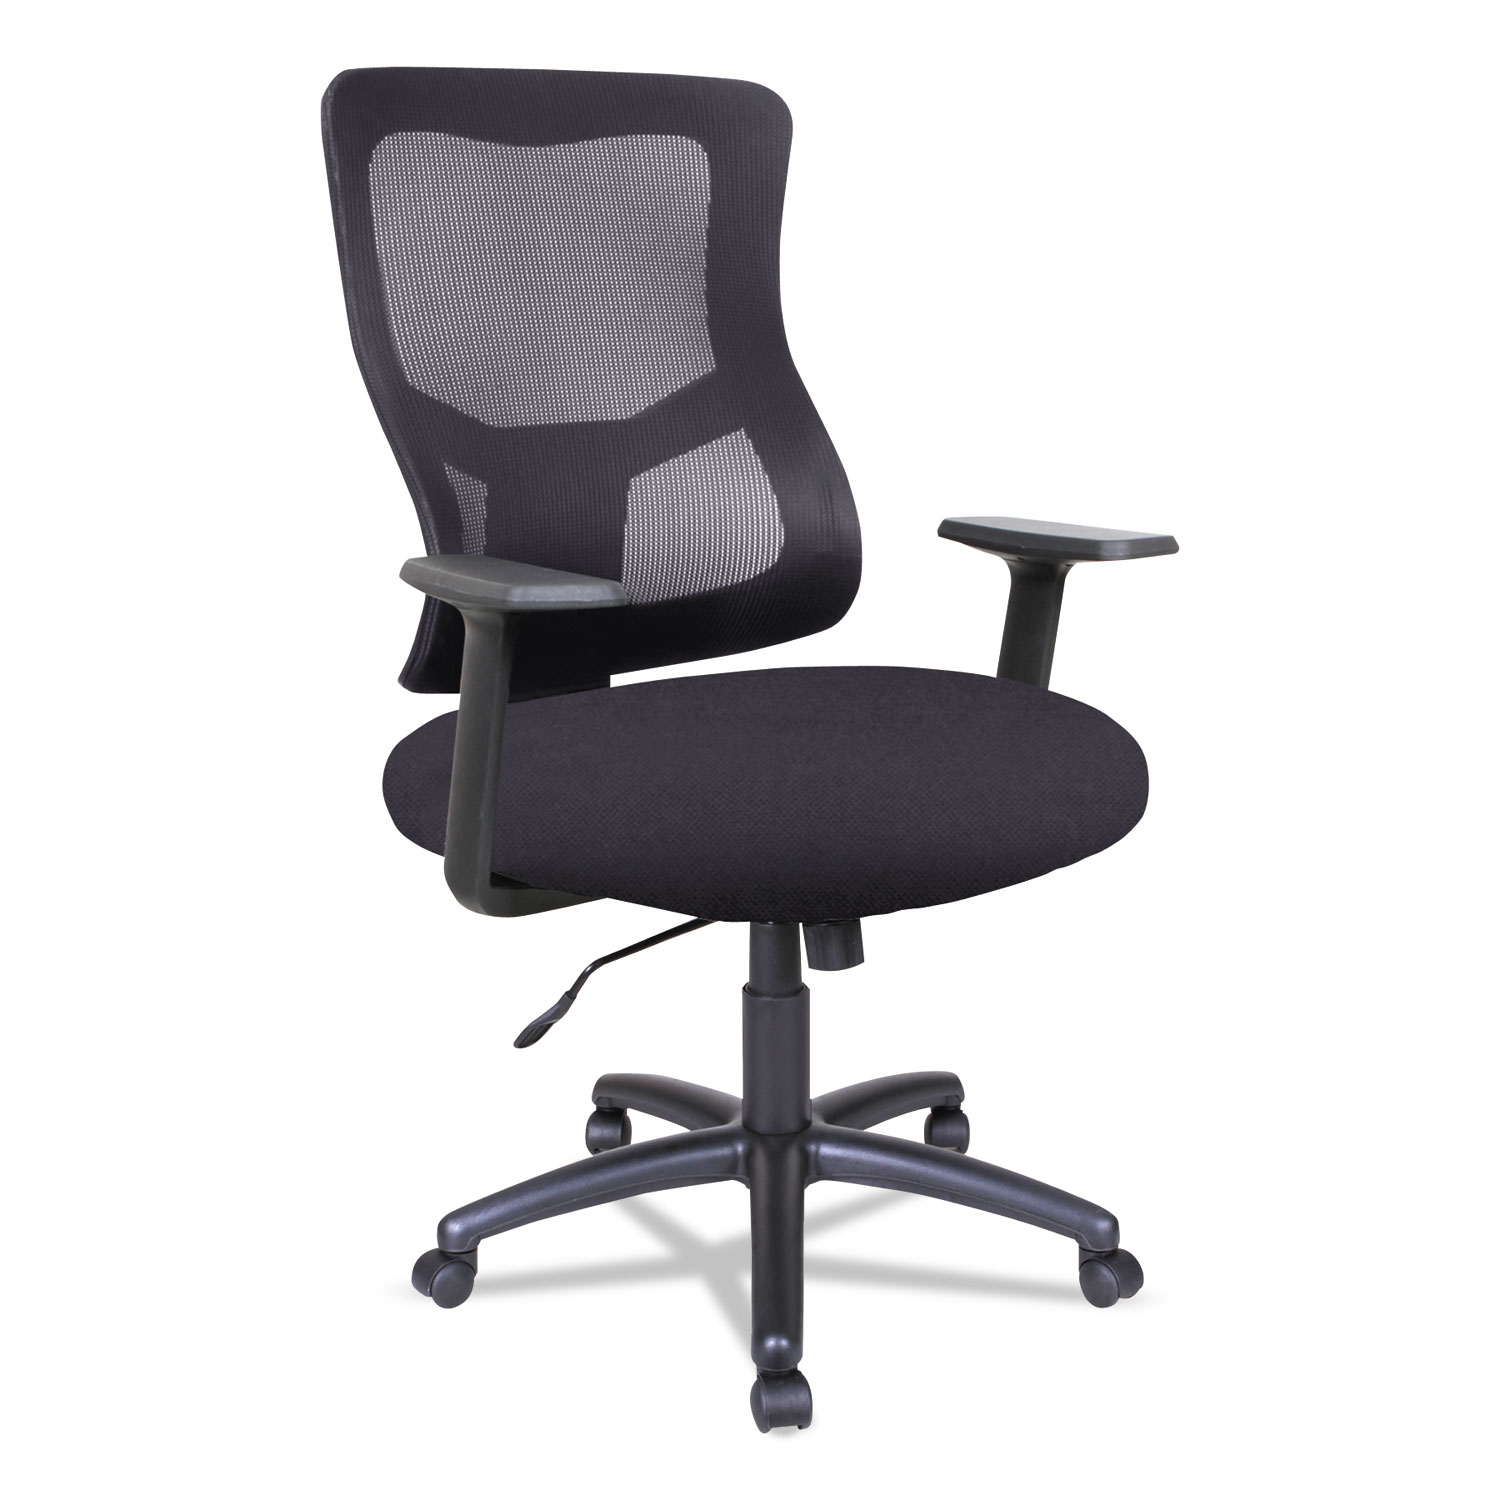  Alera ALEELT4214B Alera Elusion II Series Mesh Mid-Back Swivel/Tilt Chair, Supports up to 275 lbs., Black Seat/Black Back, Black Base (ALEELT4214B) 